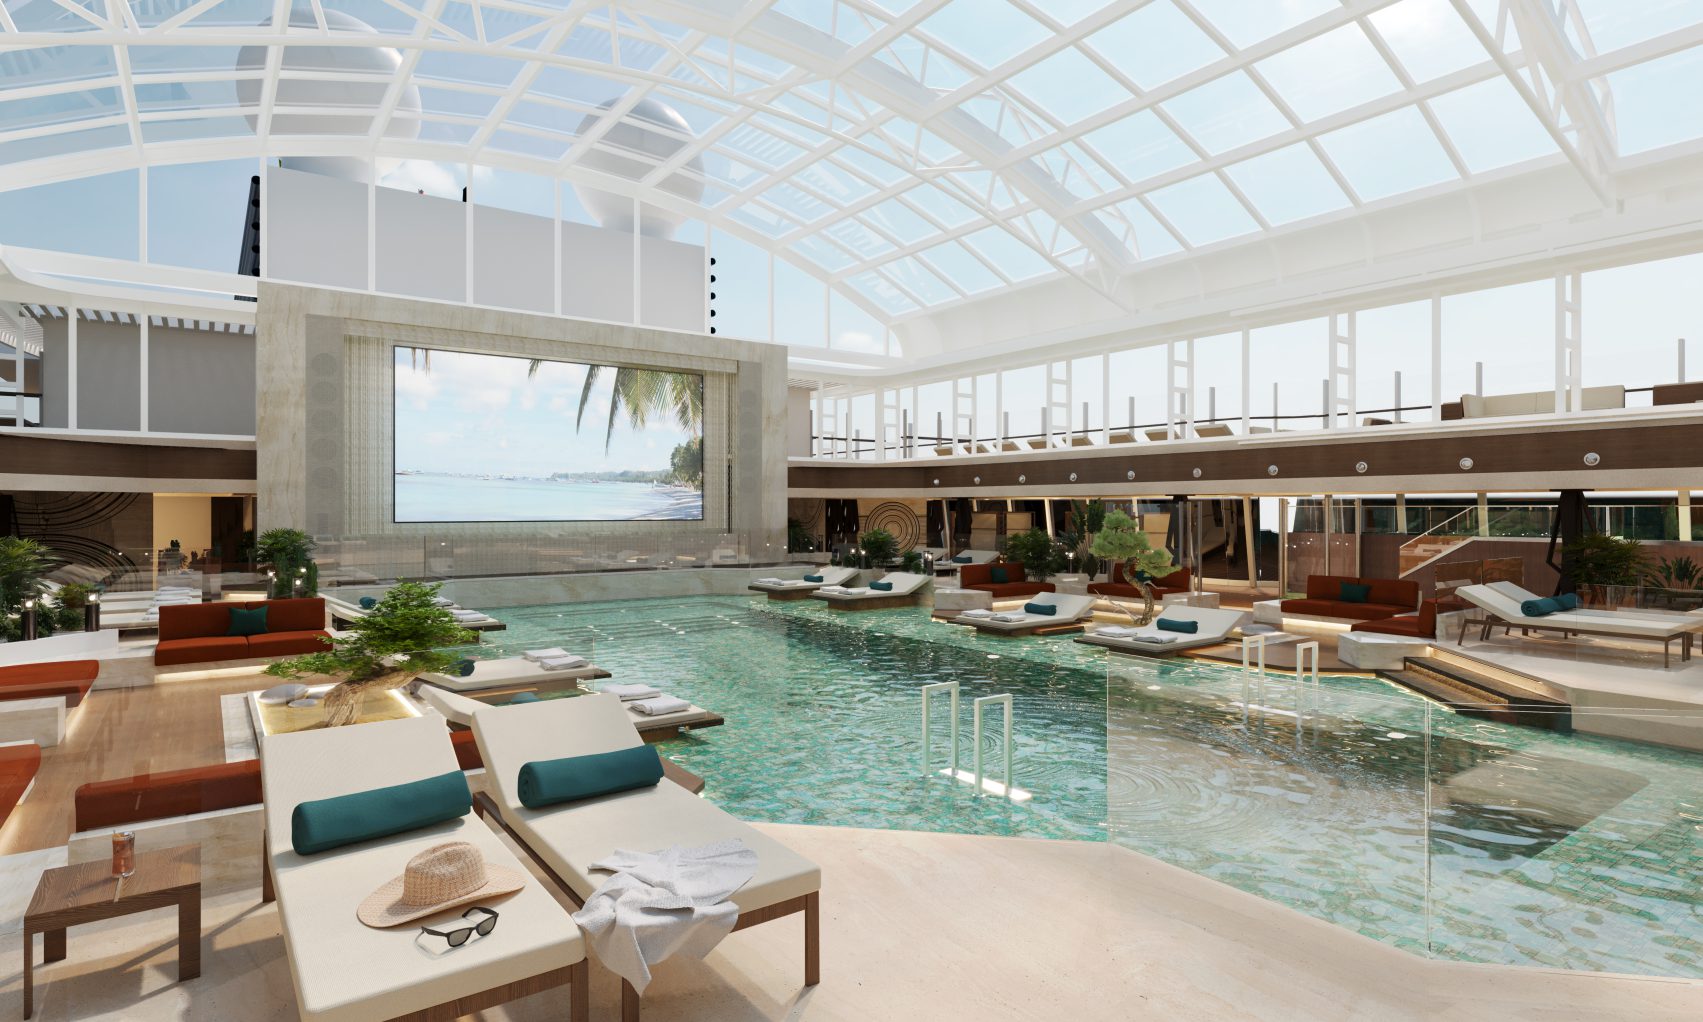 Explora's indoor pool with glass retractable roof